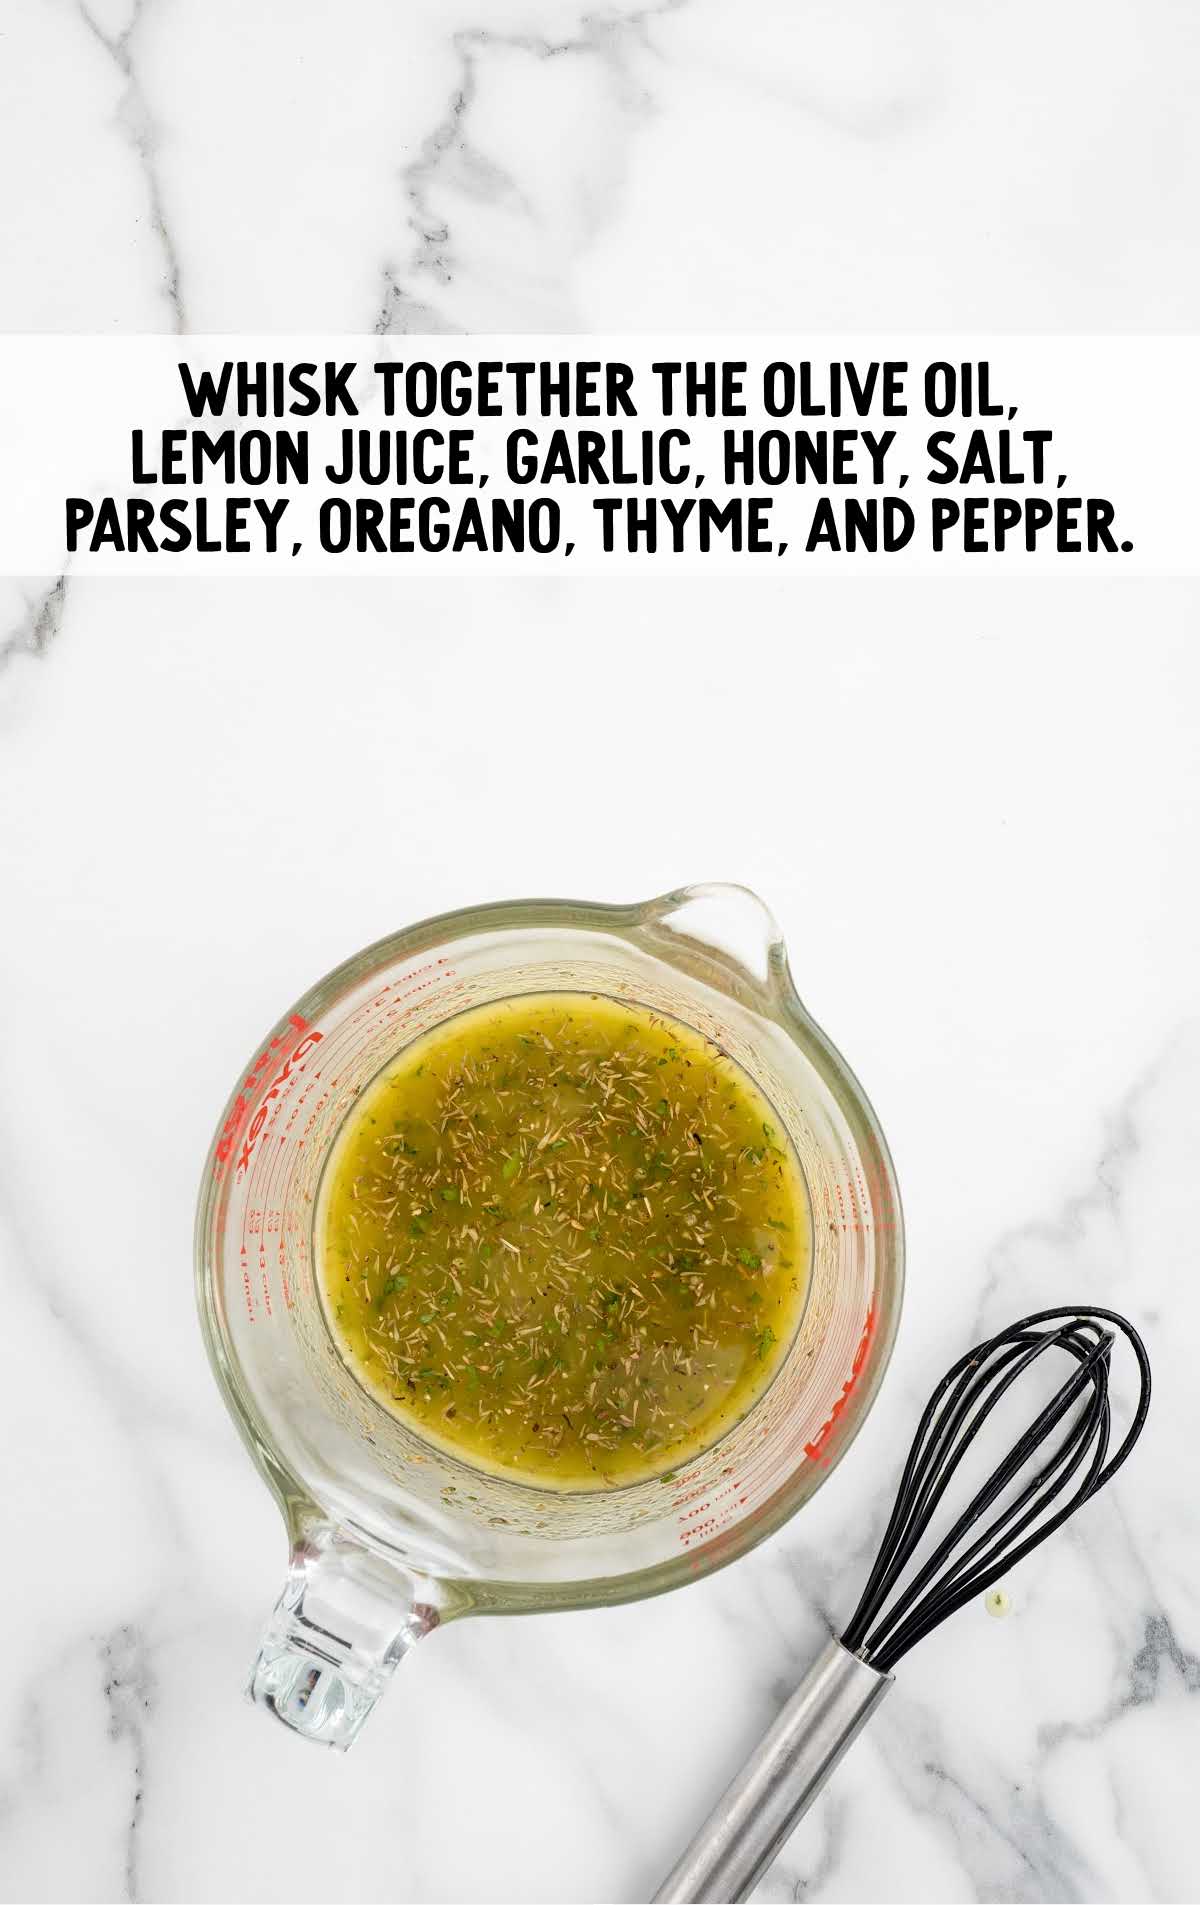 olive oil, lemon juice, garlic, honey, salt, parsley, oregano, thyme, and pepper whisked together